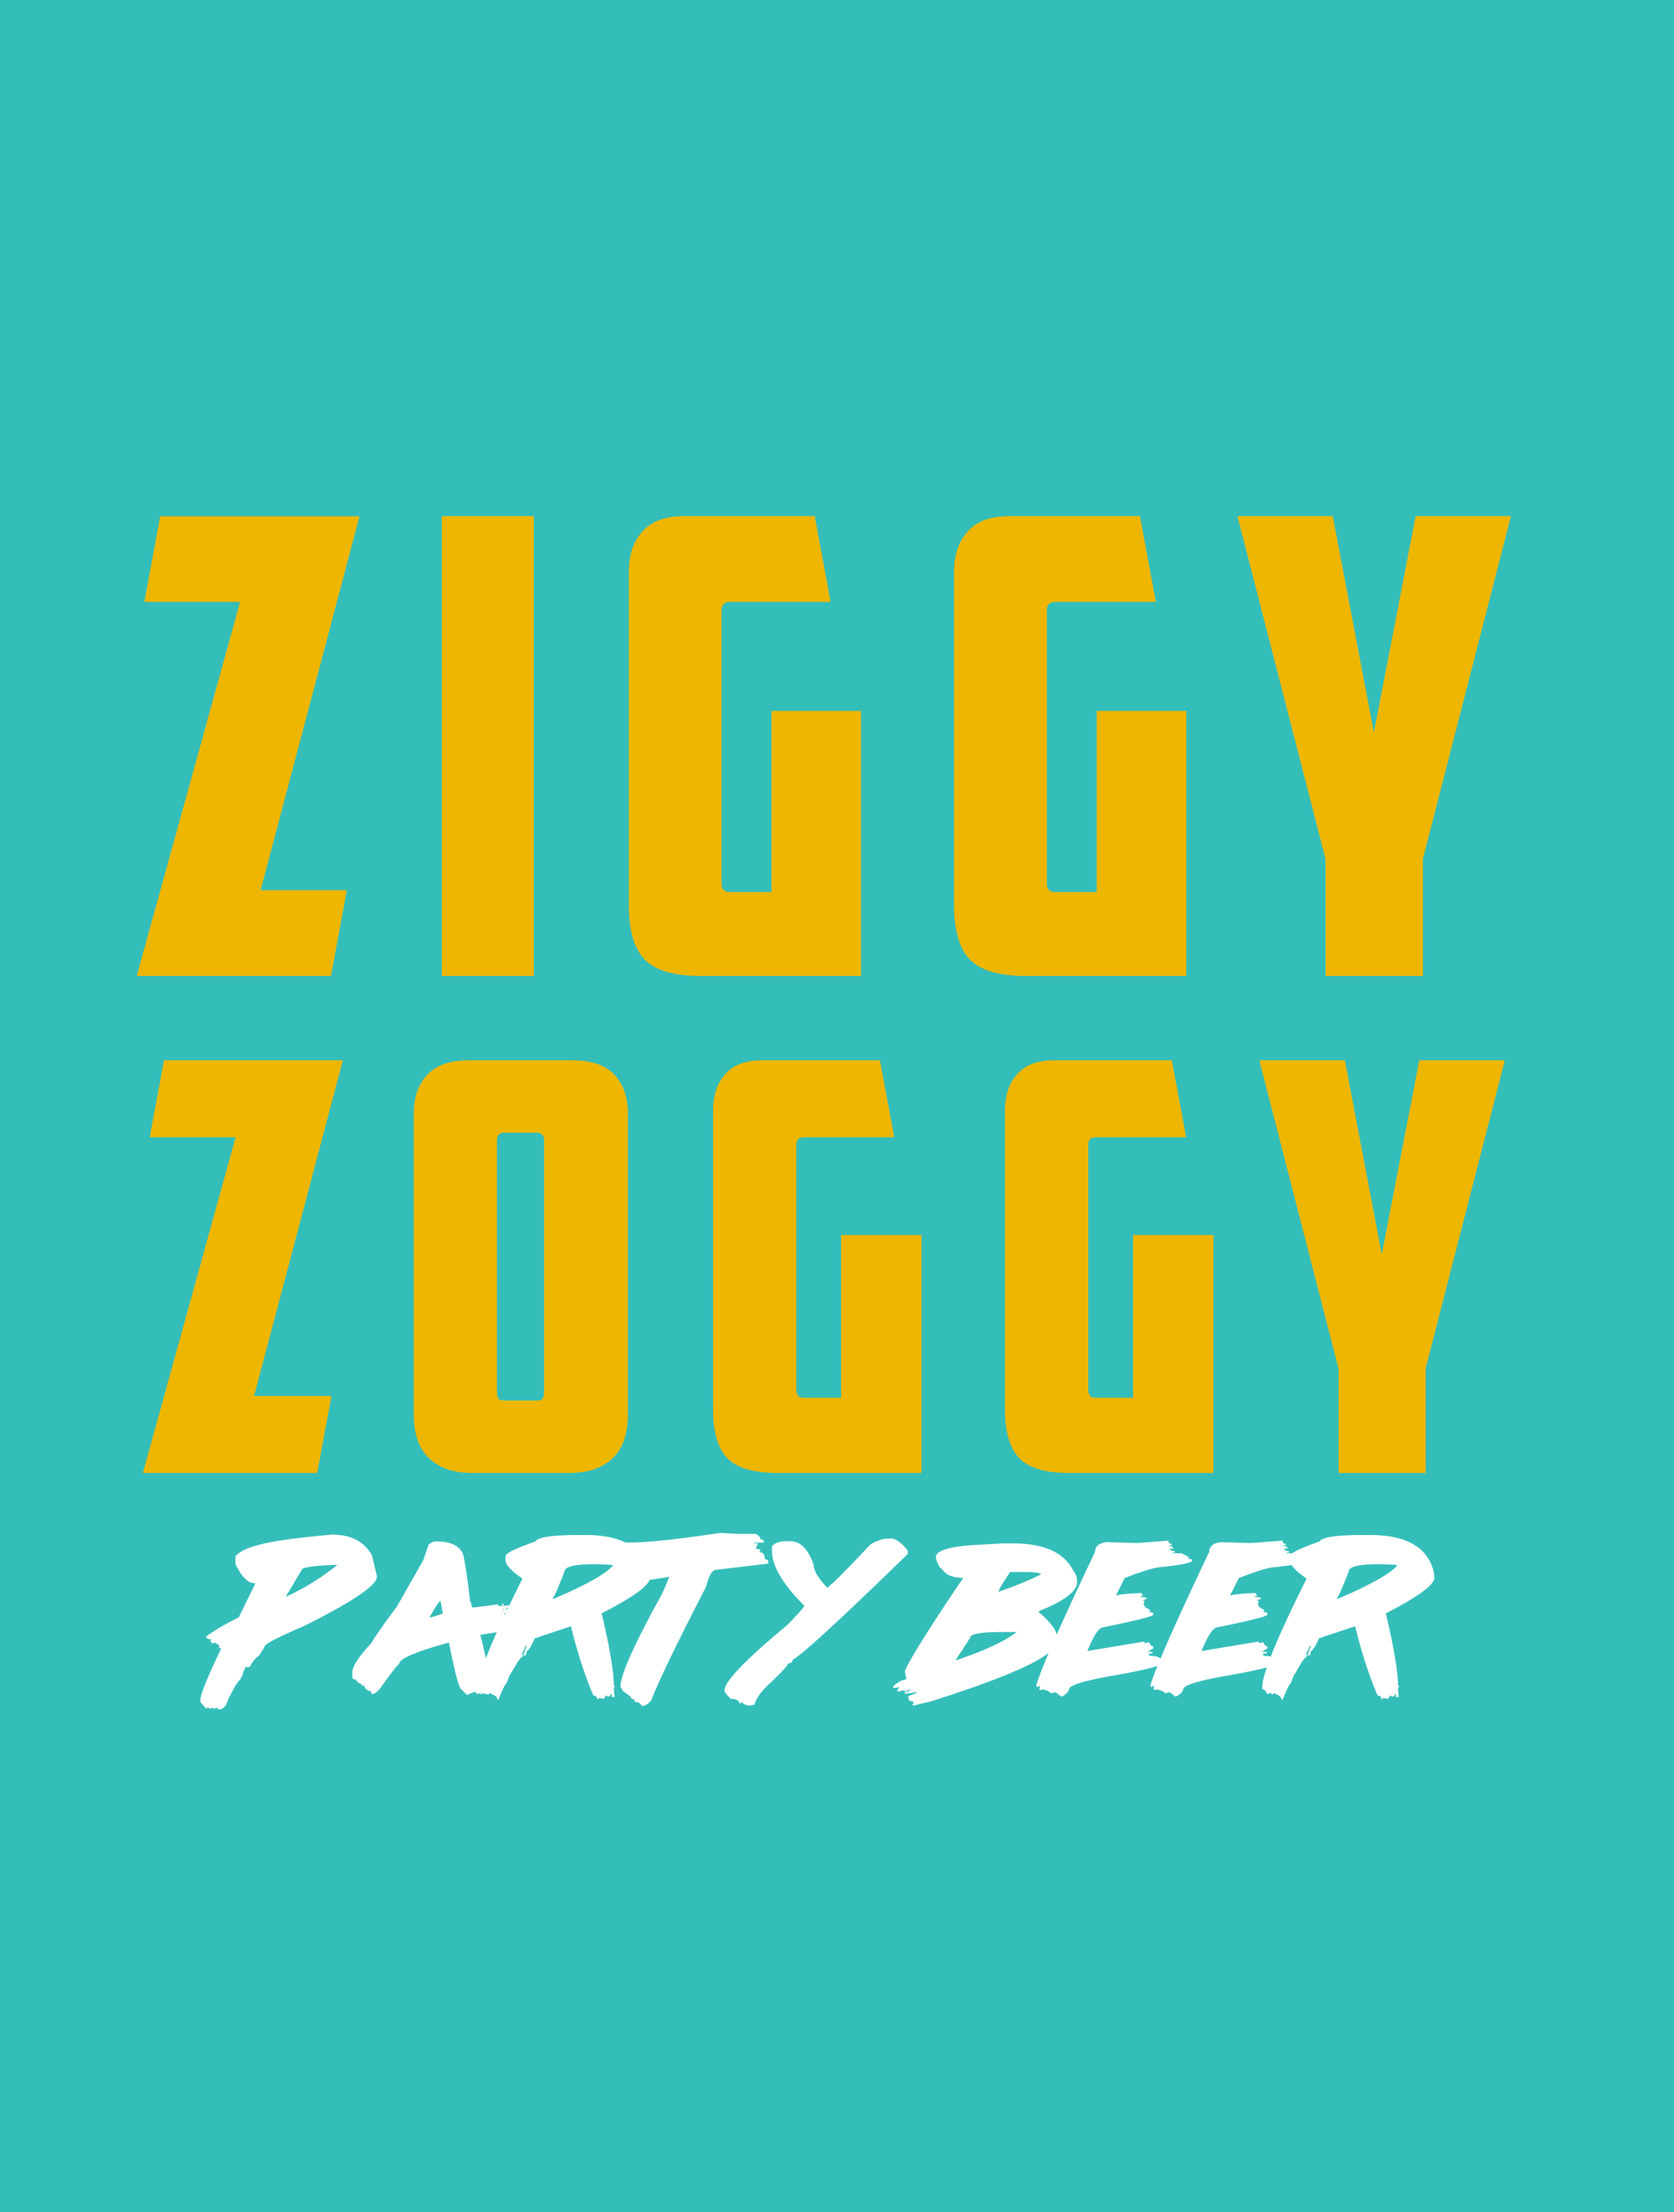 Silver City Ziggy Zoggy · T-Shirt